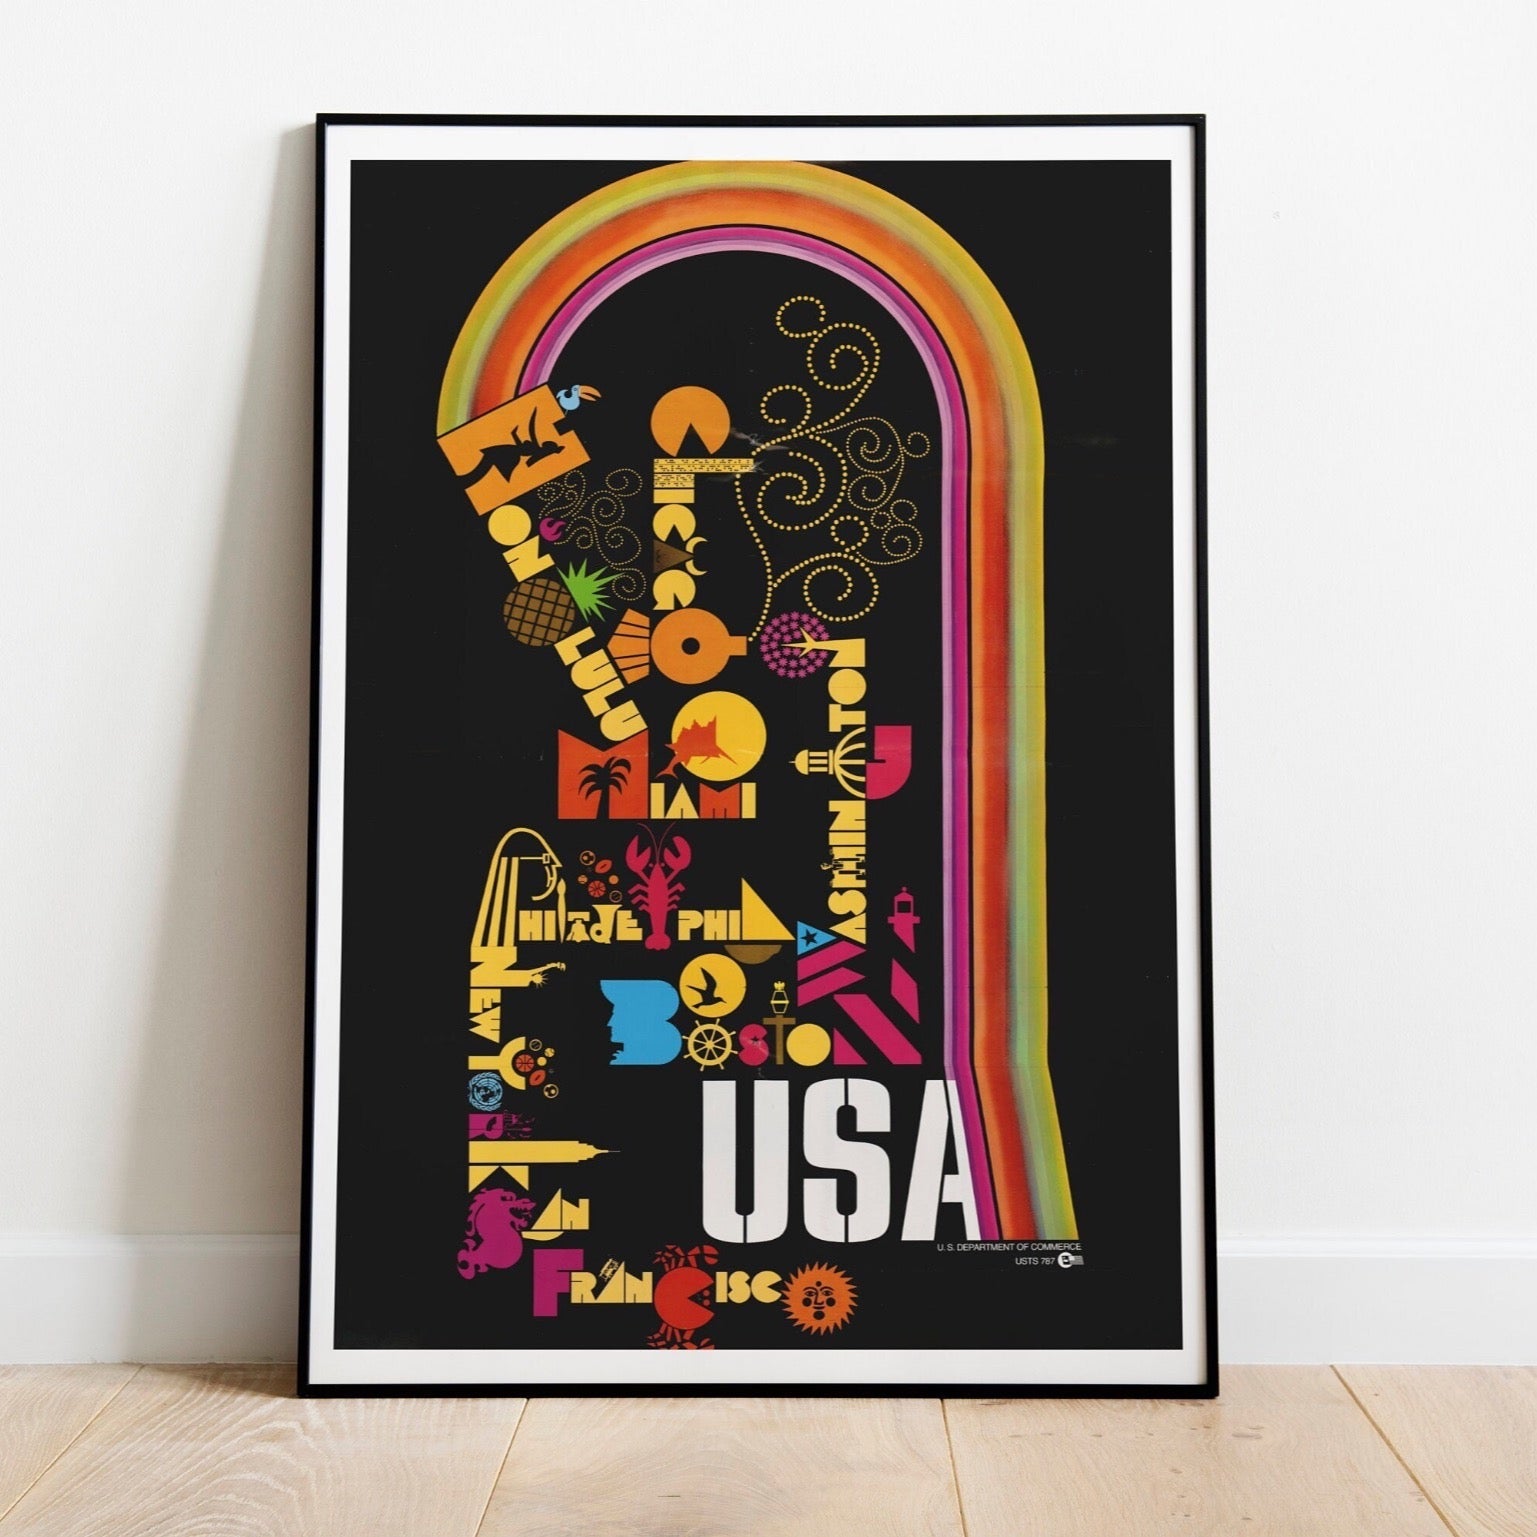 USA Cities (Vintage Poster) - Pathos Studio - Posters, Prints, & Visual Artwork